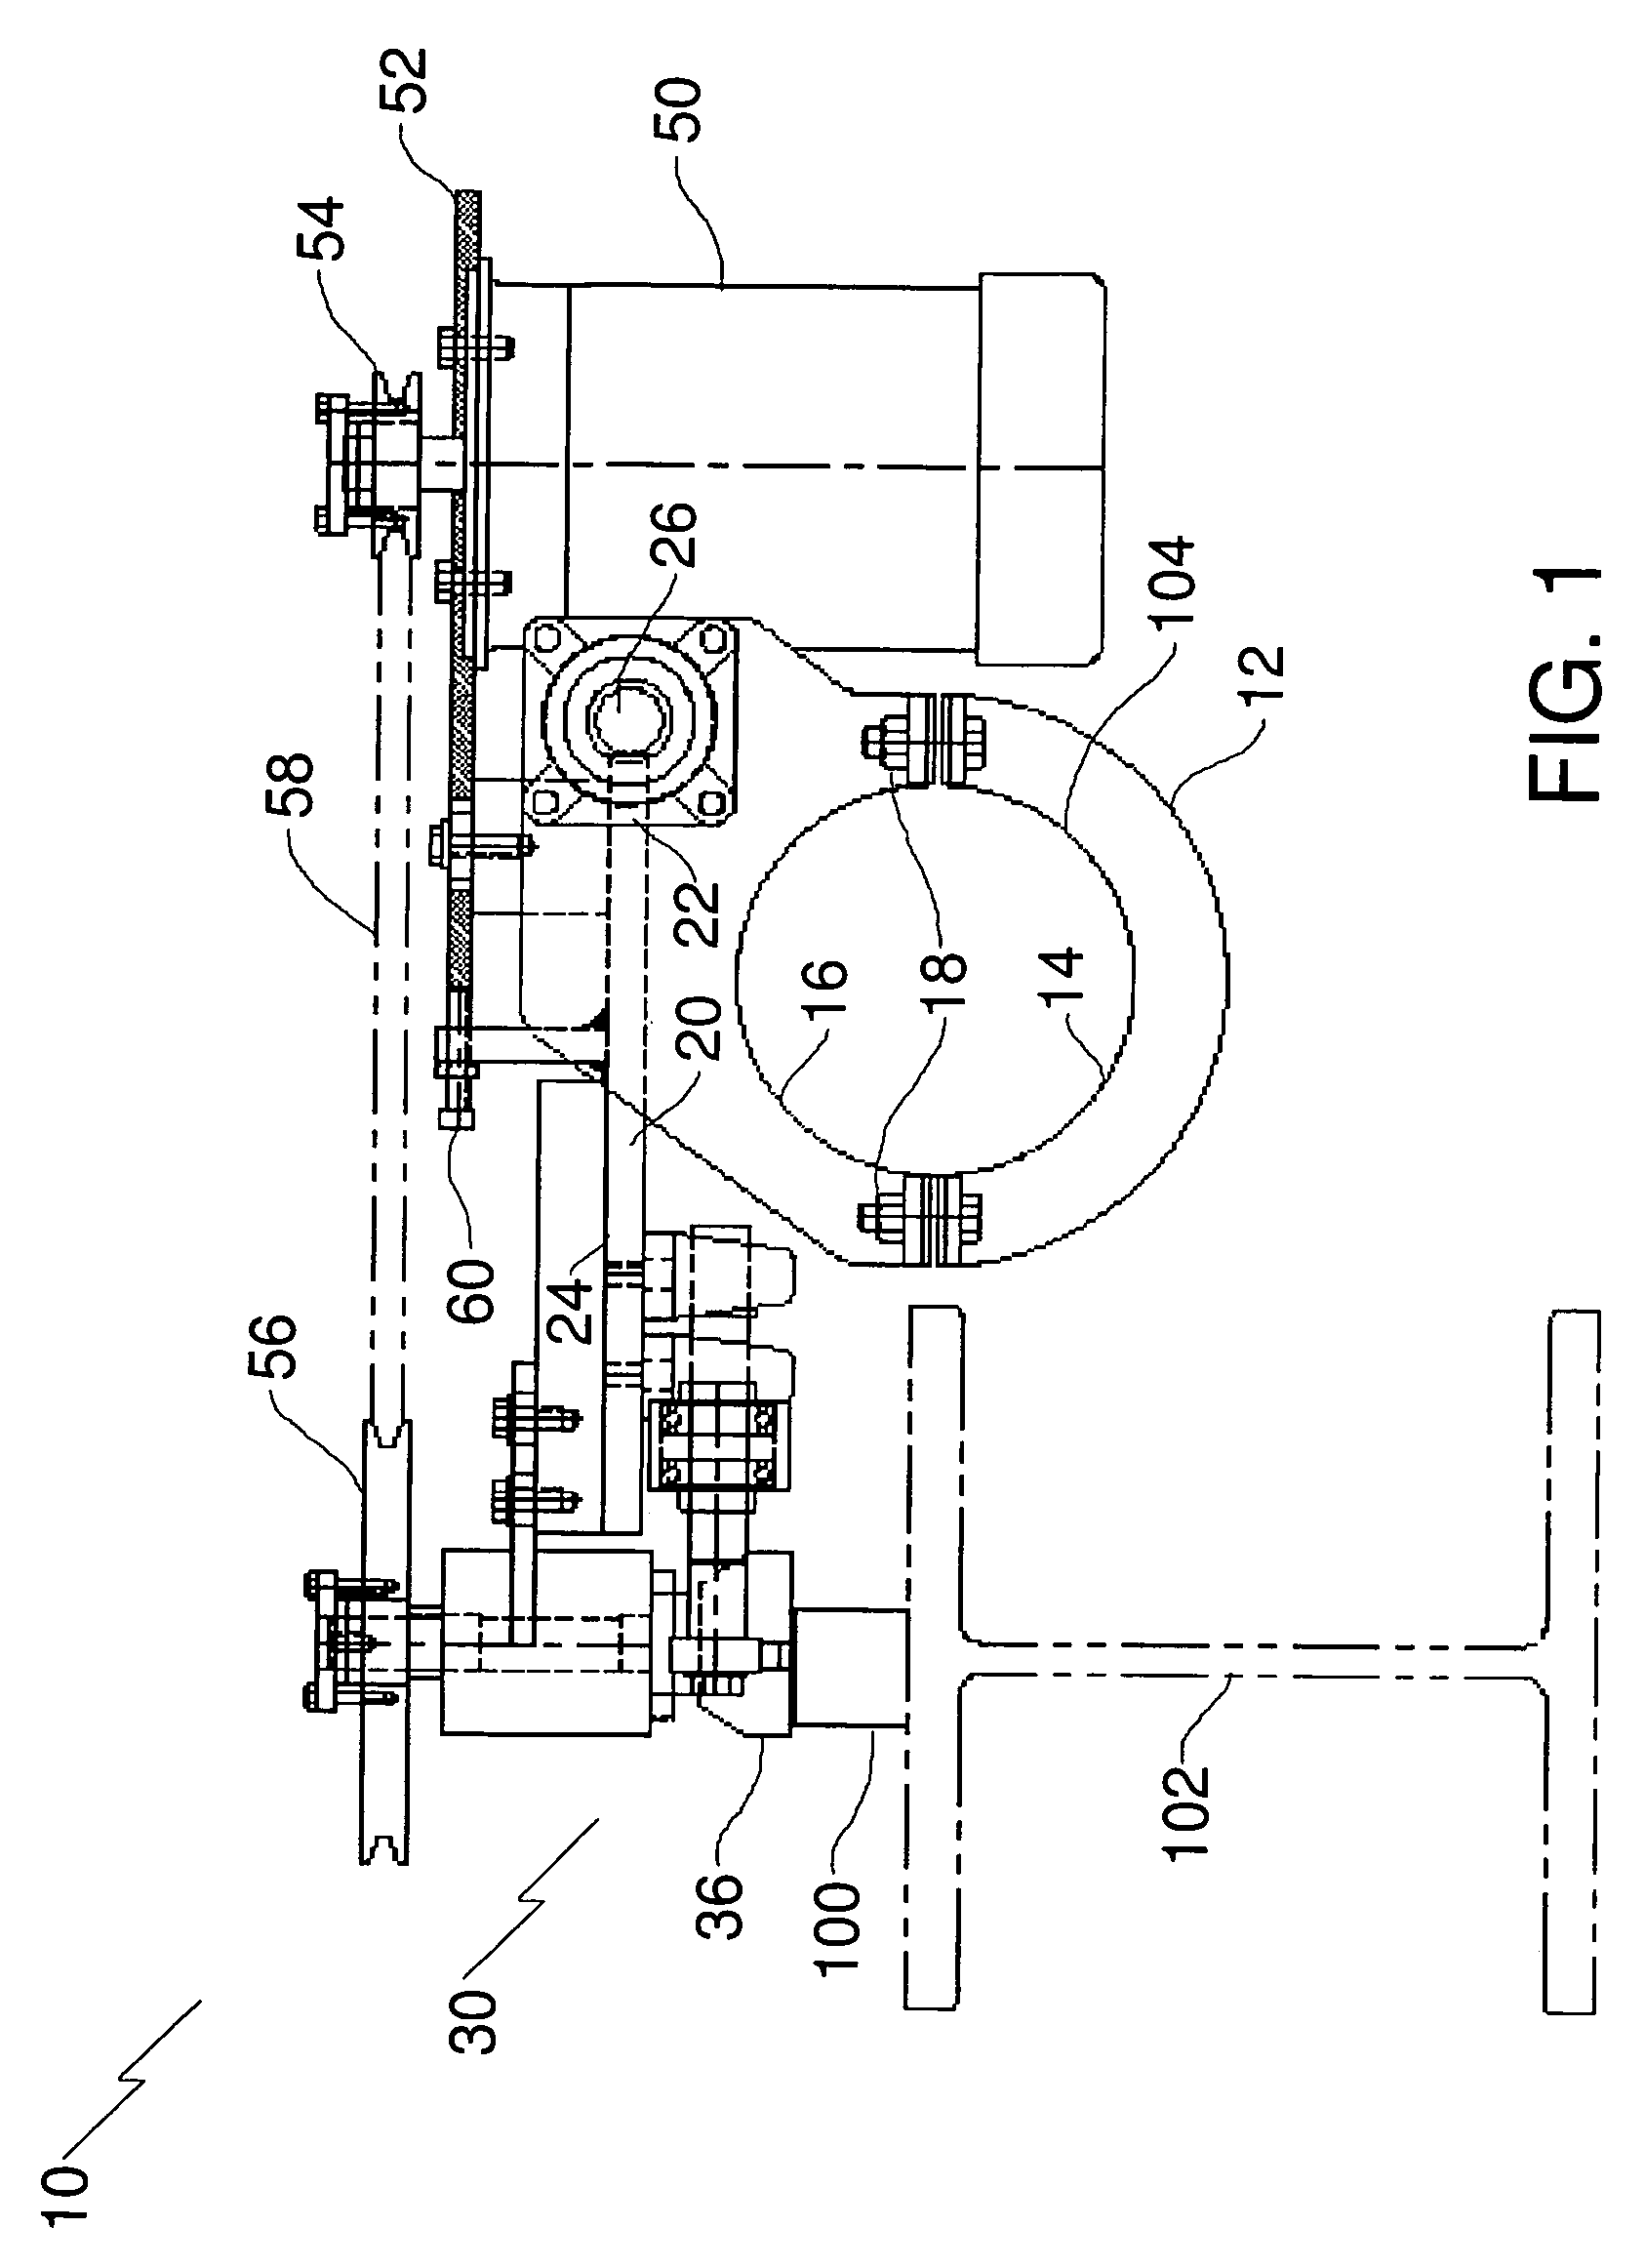 Rail grooming machine and method of use